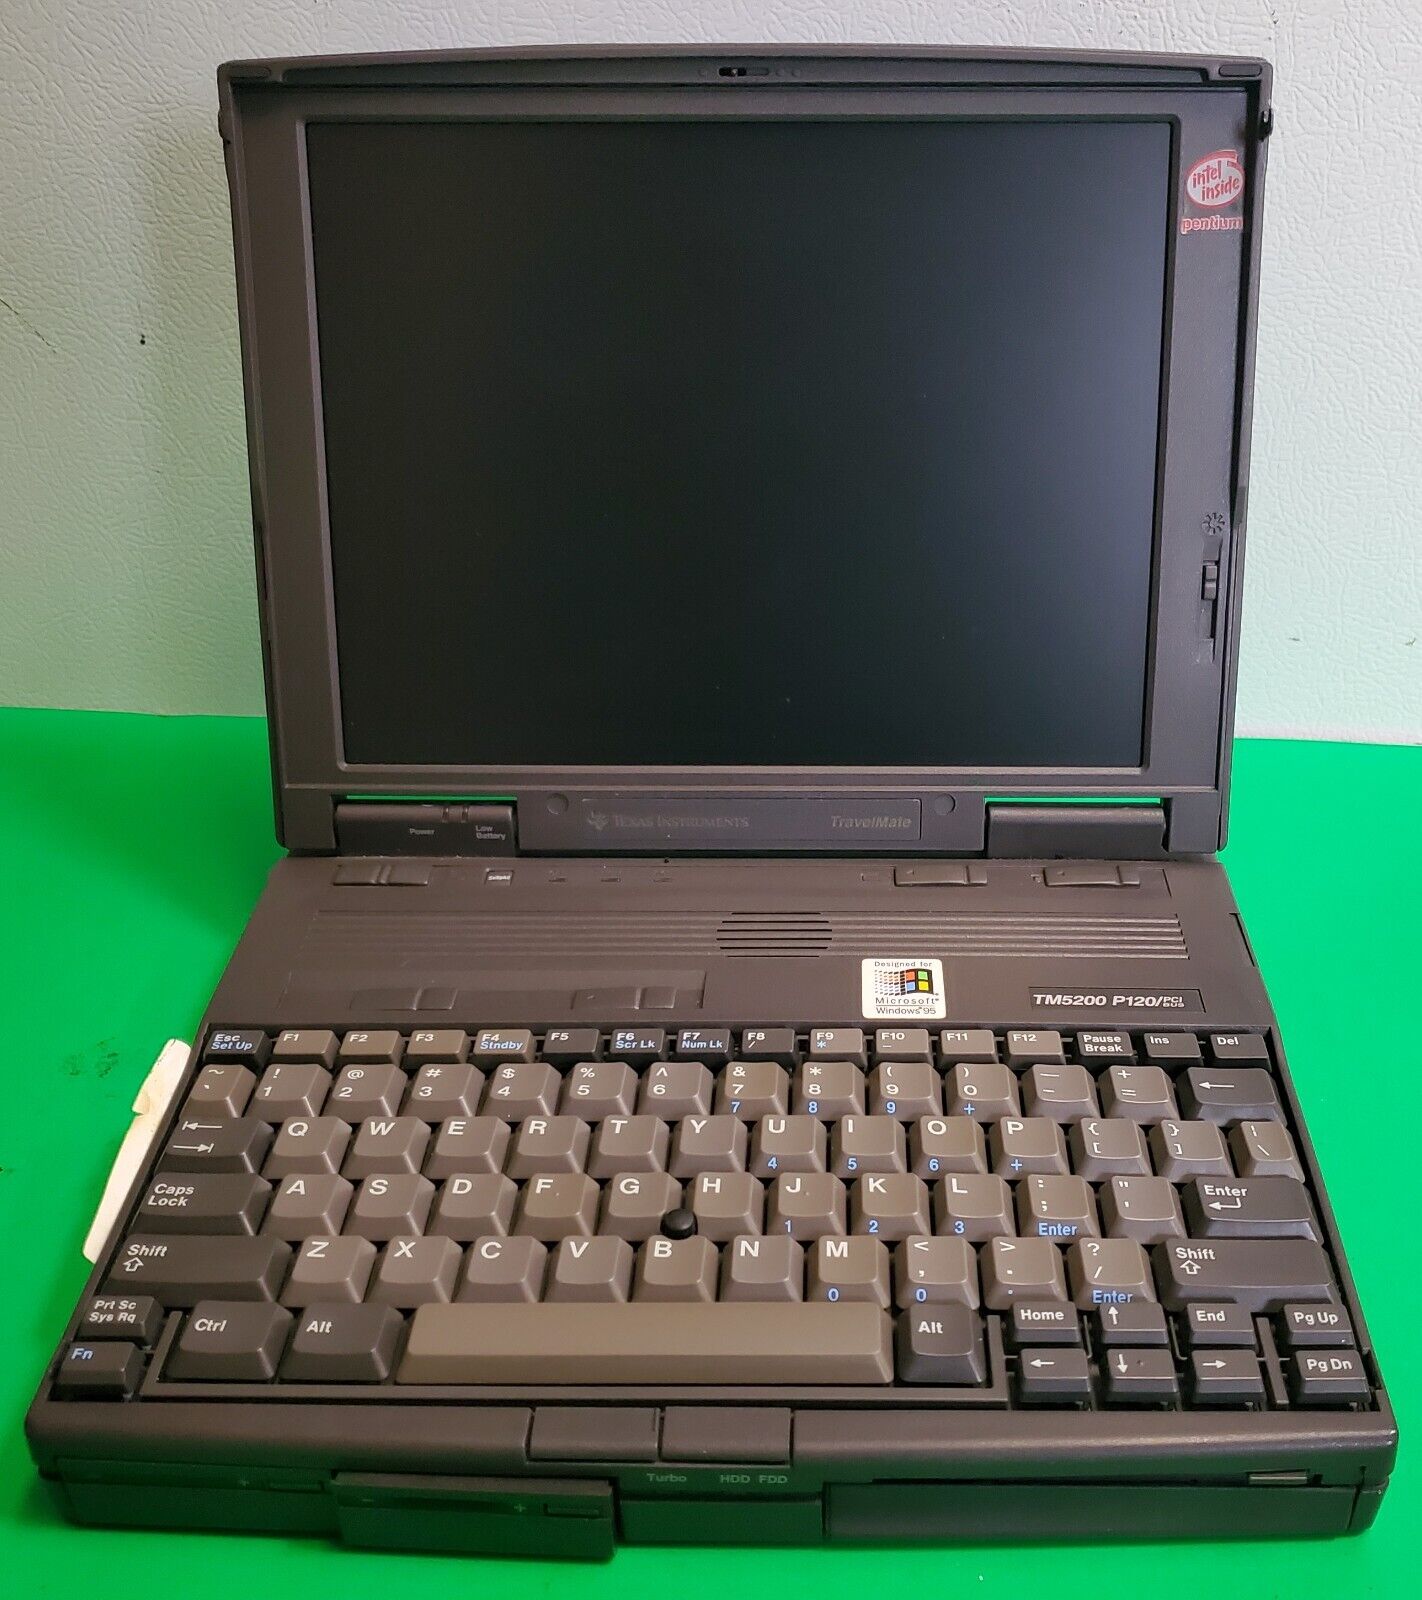 RARE Texas Instruments Travelmate TM5200 P120 Laptop Computer Vintage - Untested